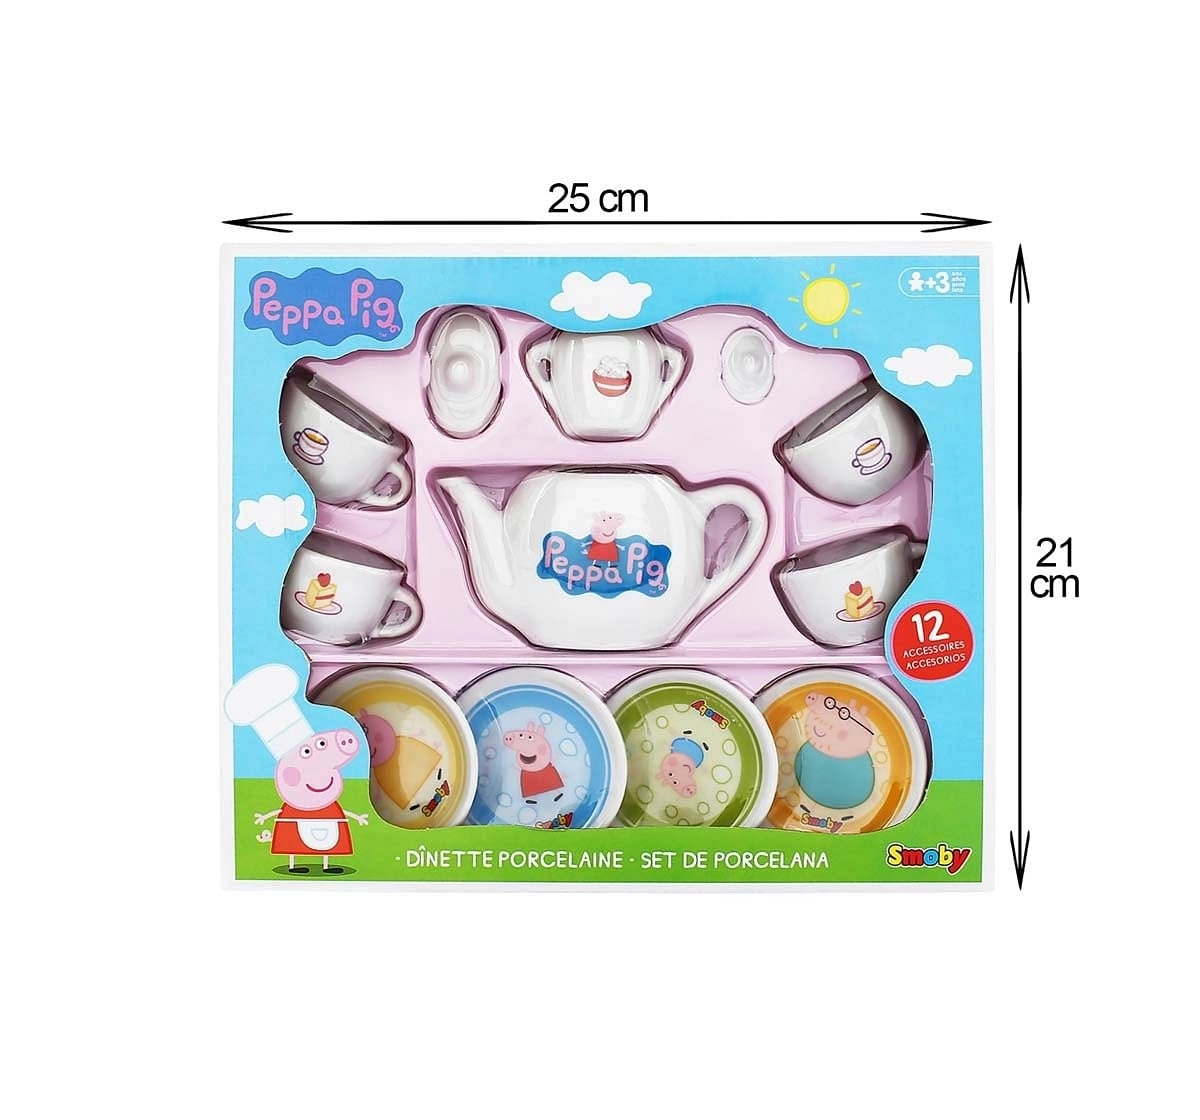 Peppa Pig Smoby and Porcelain Tea Set Kitchen Sets & Appliances for age 3Y+ 